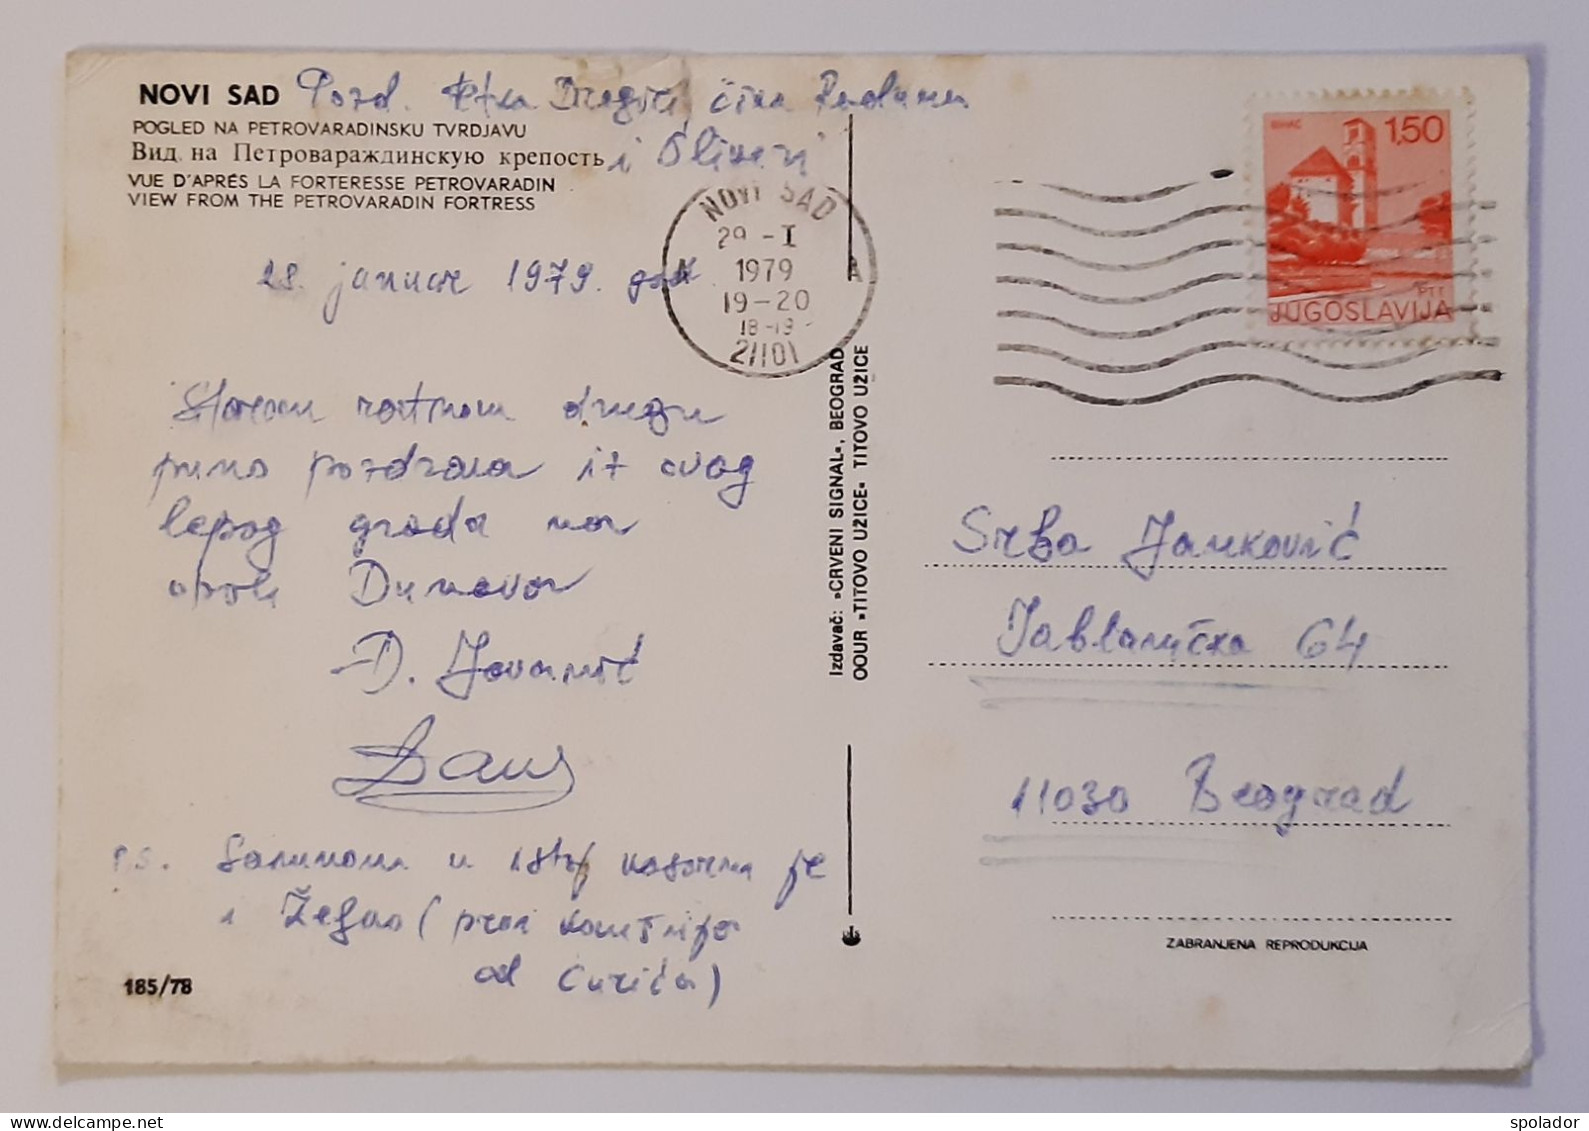 NOVI SAD-Ex-Yugoslavia-Vintage Postcard-Serbia-View From The Petrovaradin Fortress-1979-used With Stamp - Jugoslavia